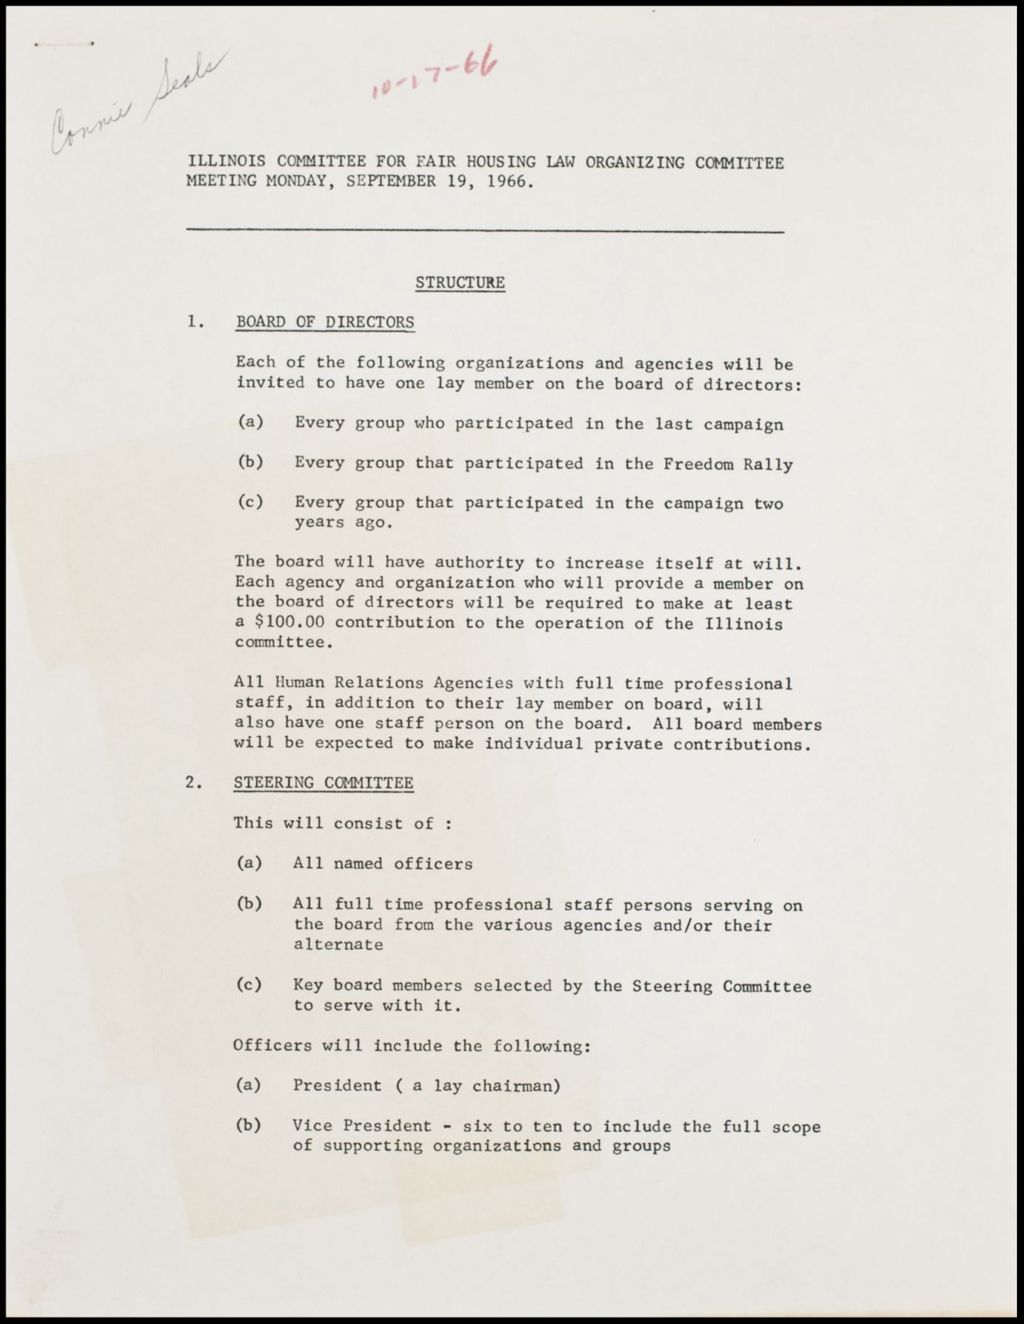 Miniature of Fair Housing Law, 1966 (Folder IV-1121)